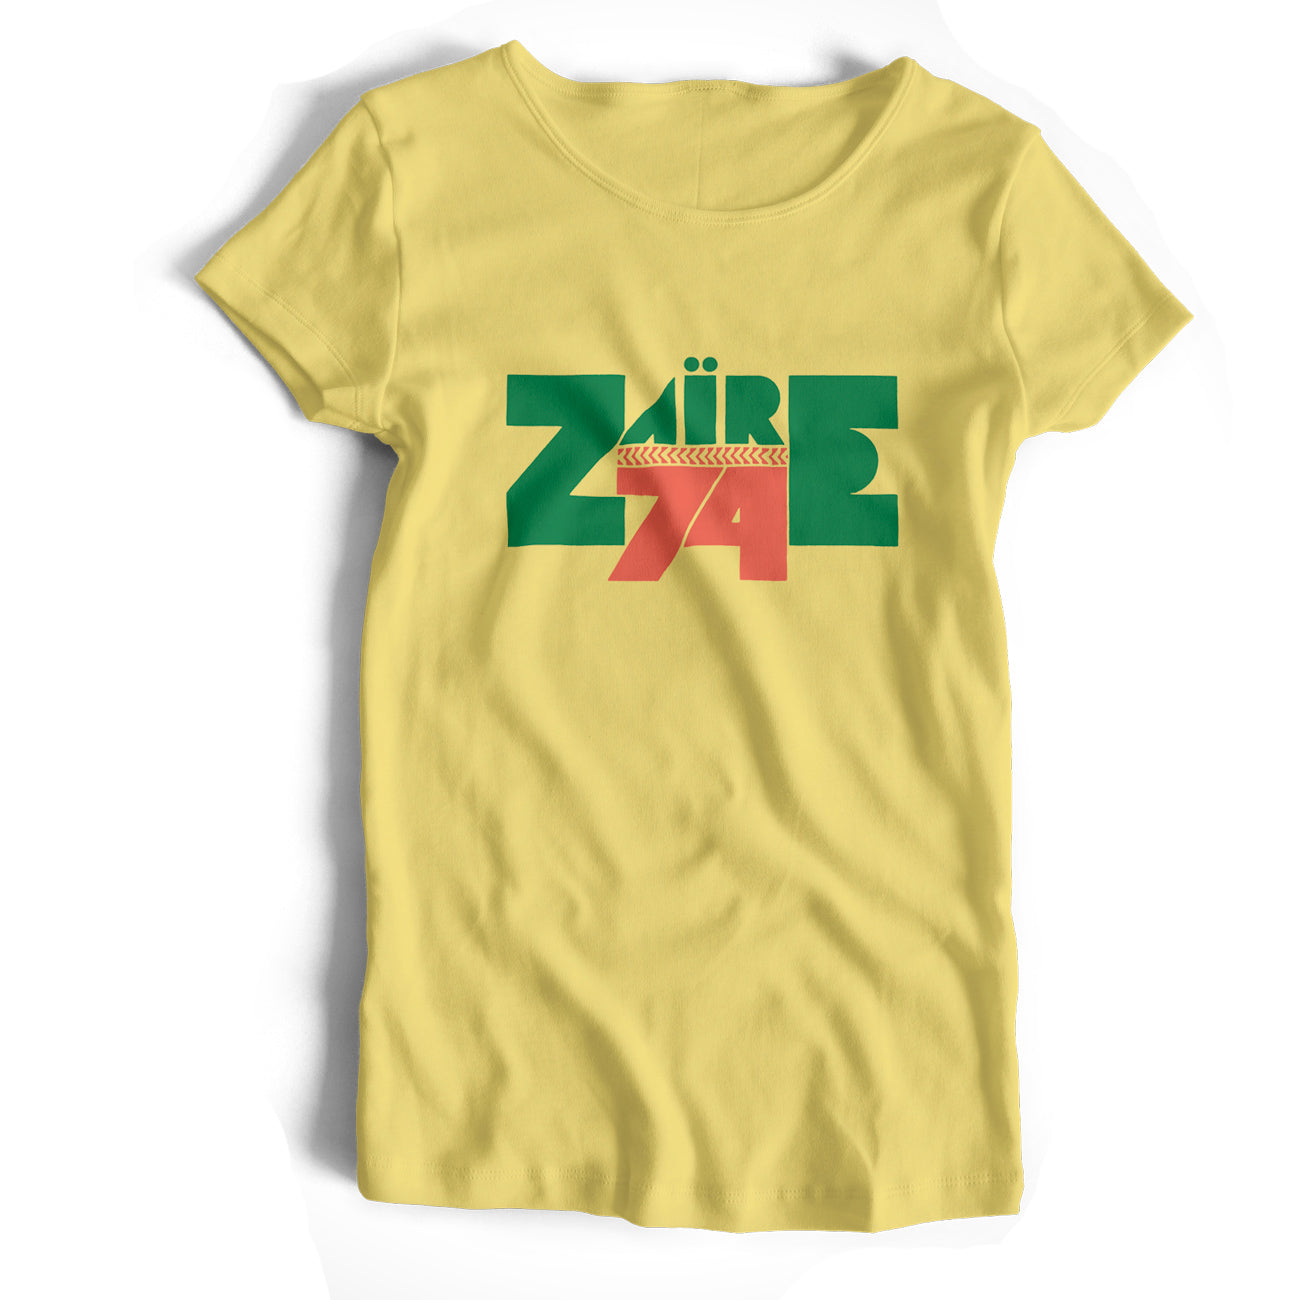 Zaire 74 T Shirt - Classic Boxing / Music Festival Logo Afrobeat 70's Funk